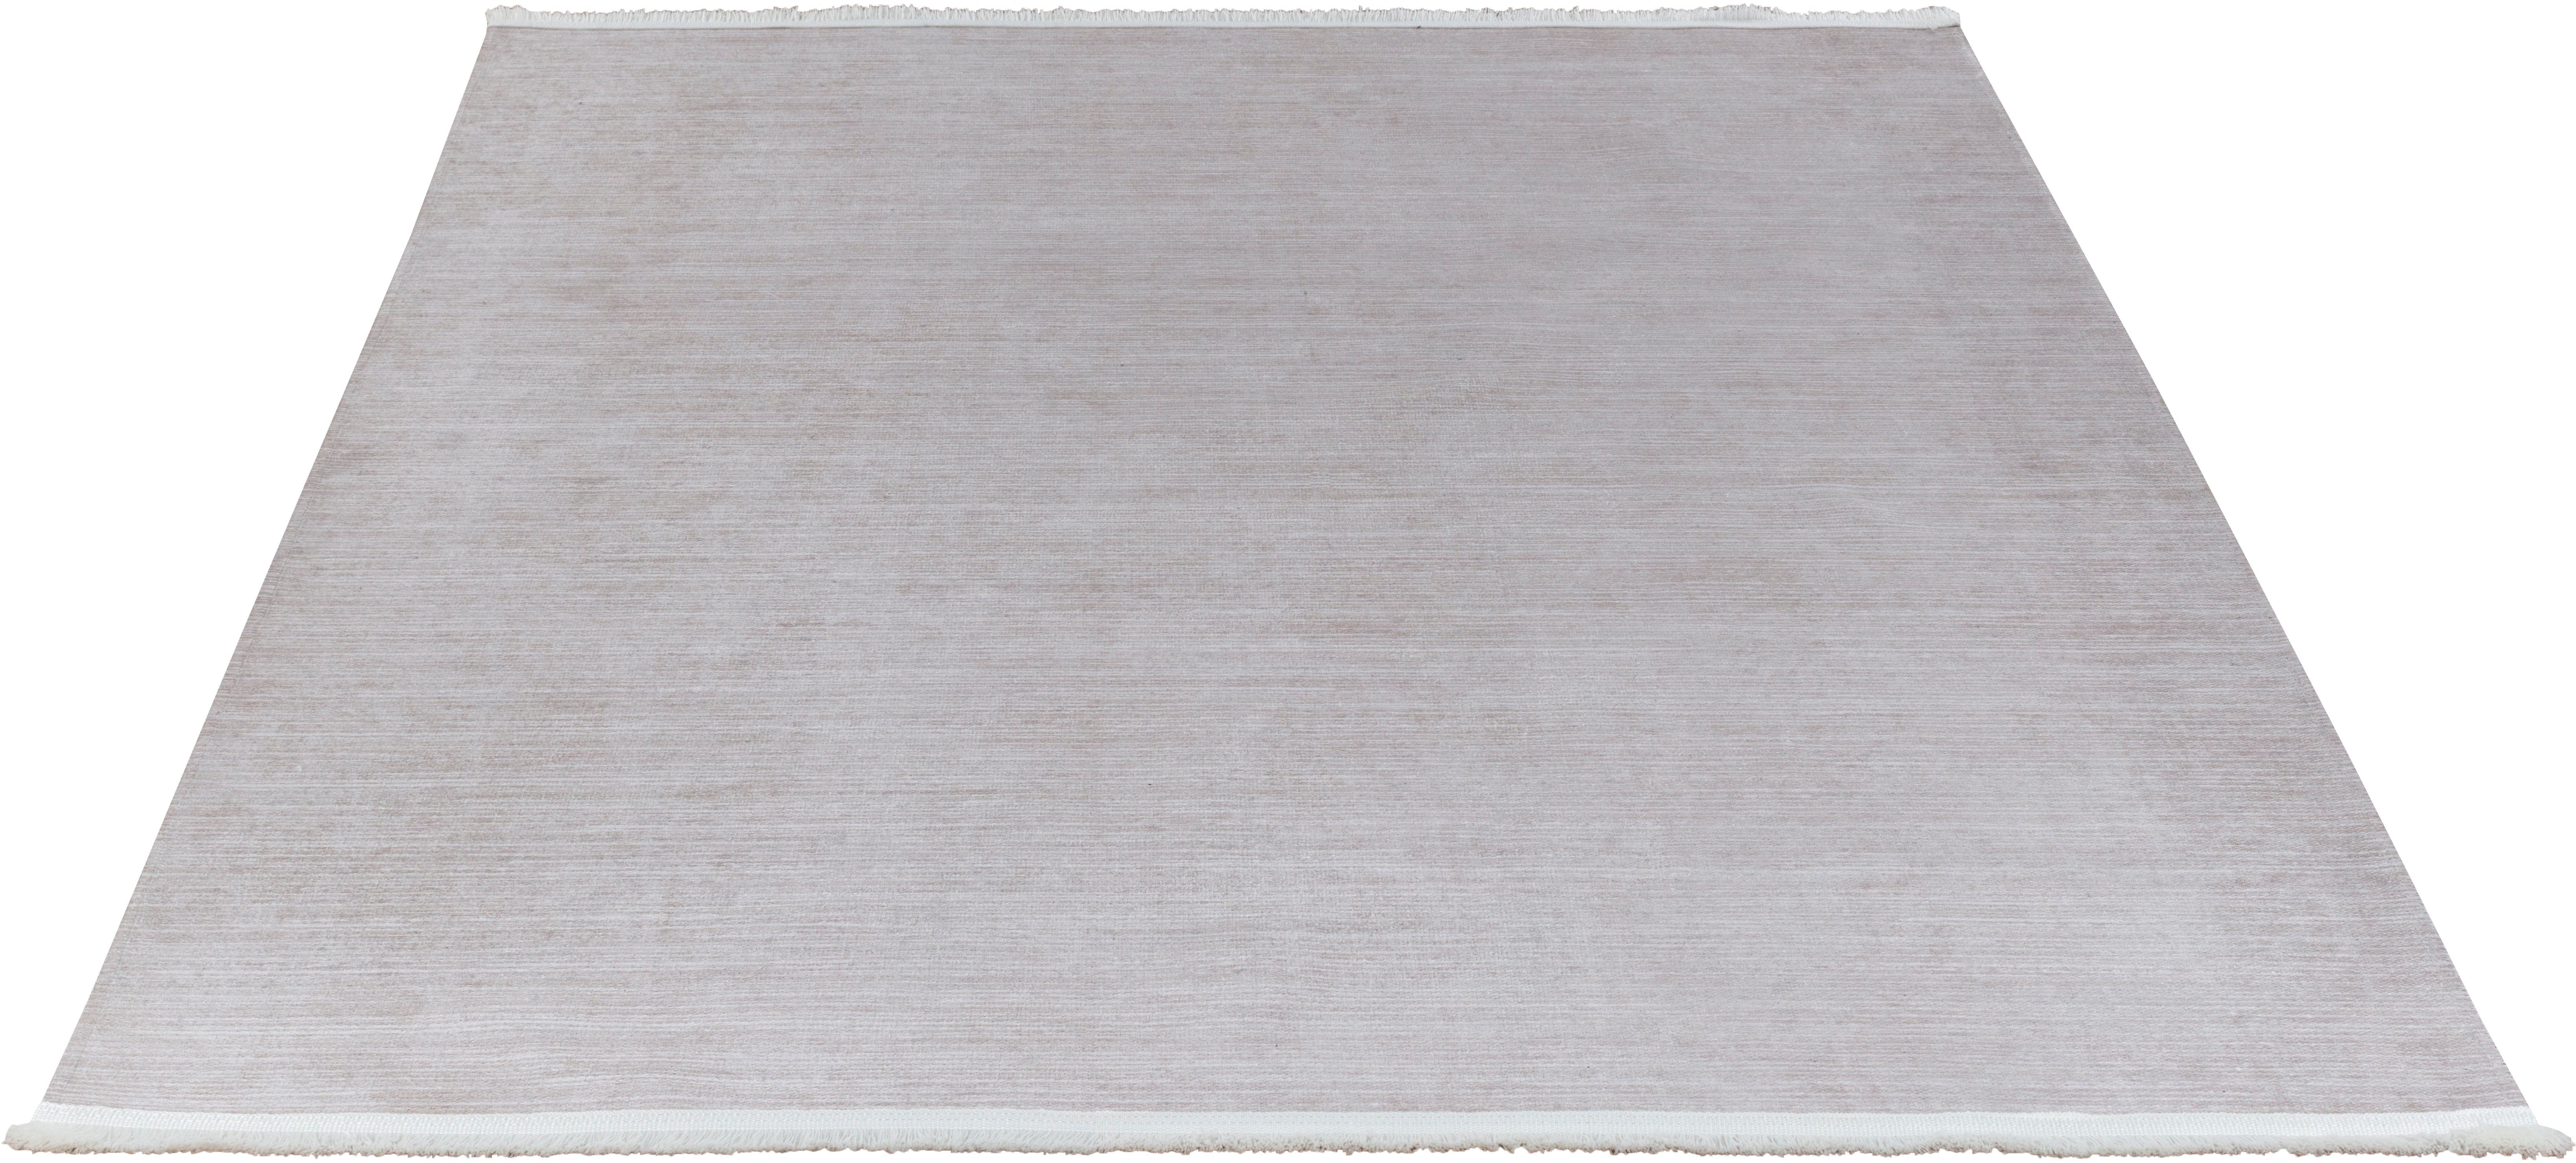 Teppich EFE 1090, Sehrazat, rechteckig, Höhe: 5 mm, Flachgewebe Teppich, Natural Look, waschbar beige